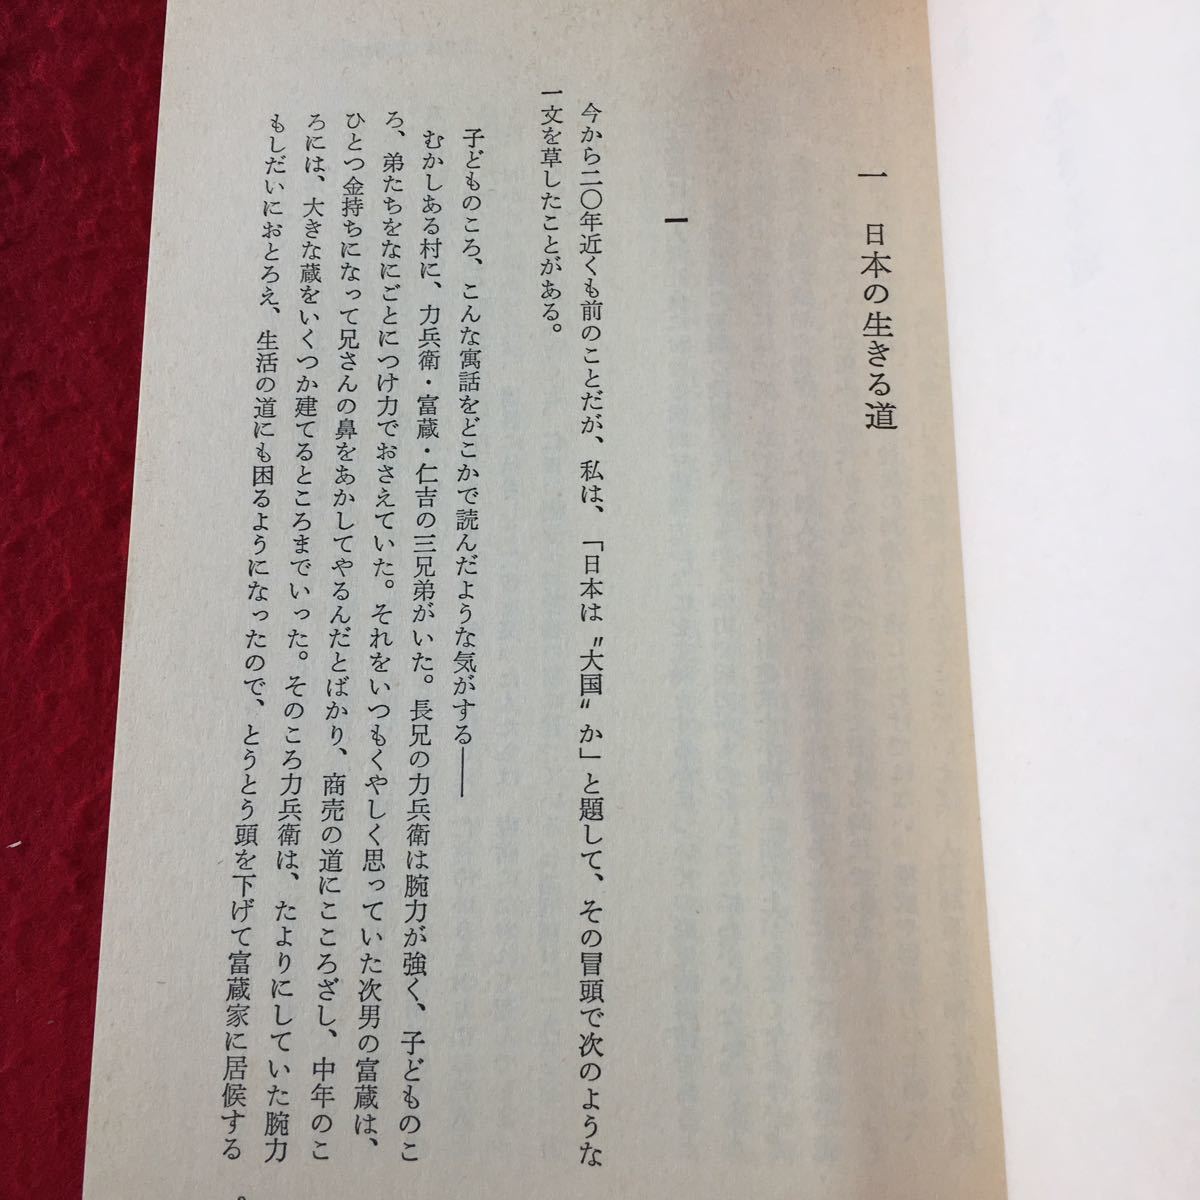 h-457 ※1 さあ、人間の出番だ 日本の活路を考える 著者 都留重人 1982年5月31日 第1刷発行 勁草書房 社会 政治 経済 日本 社会問題_画像6